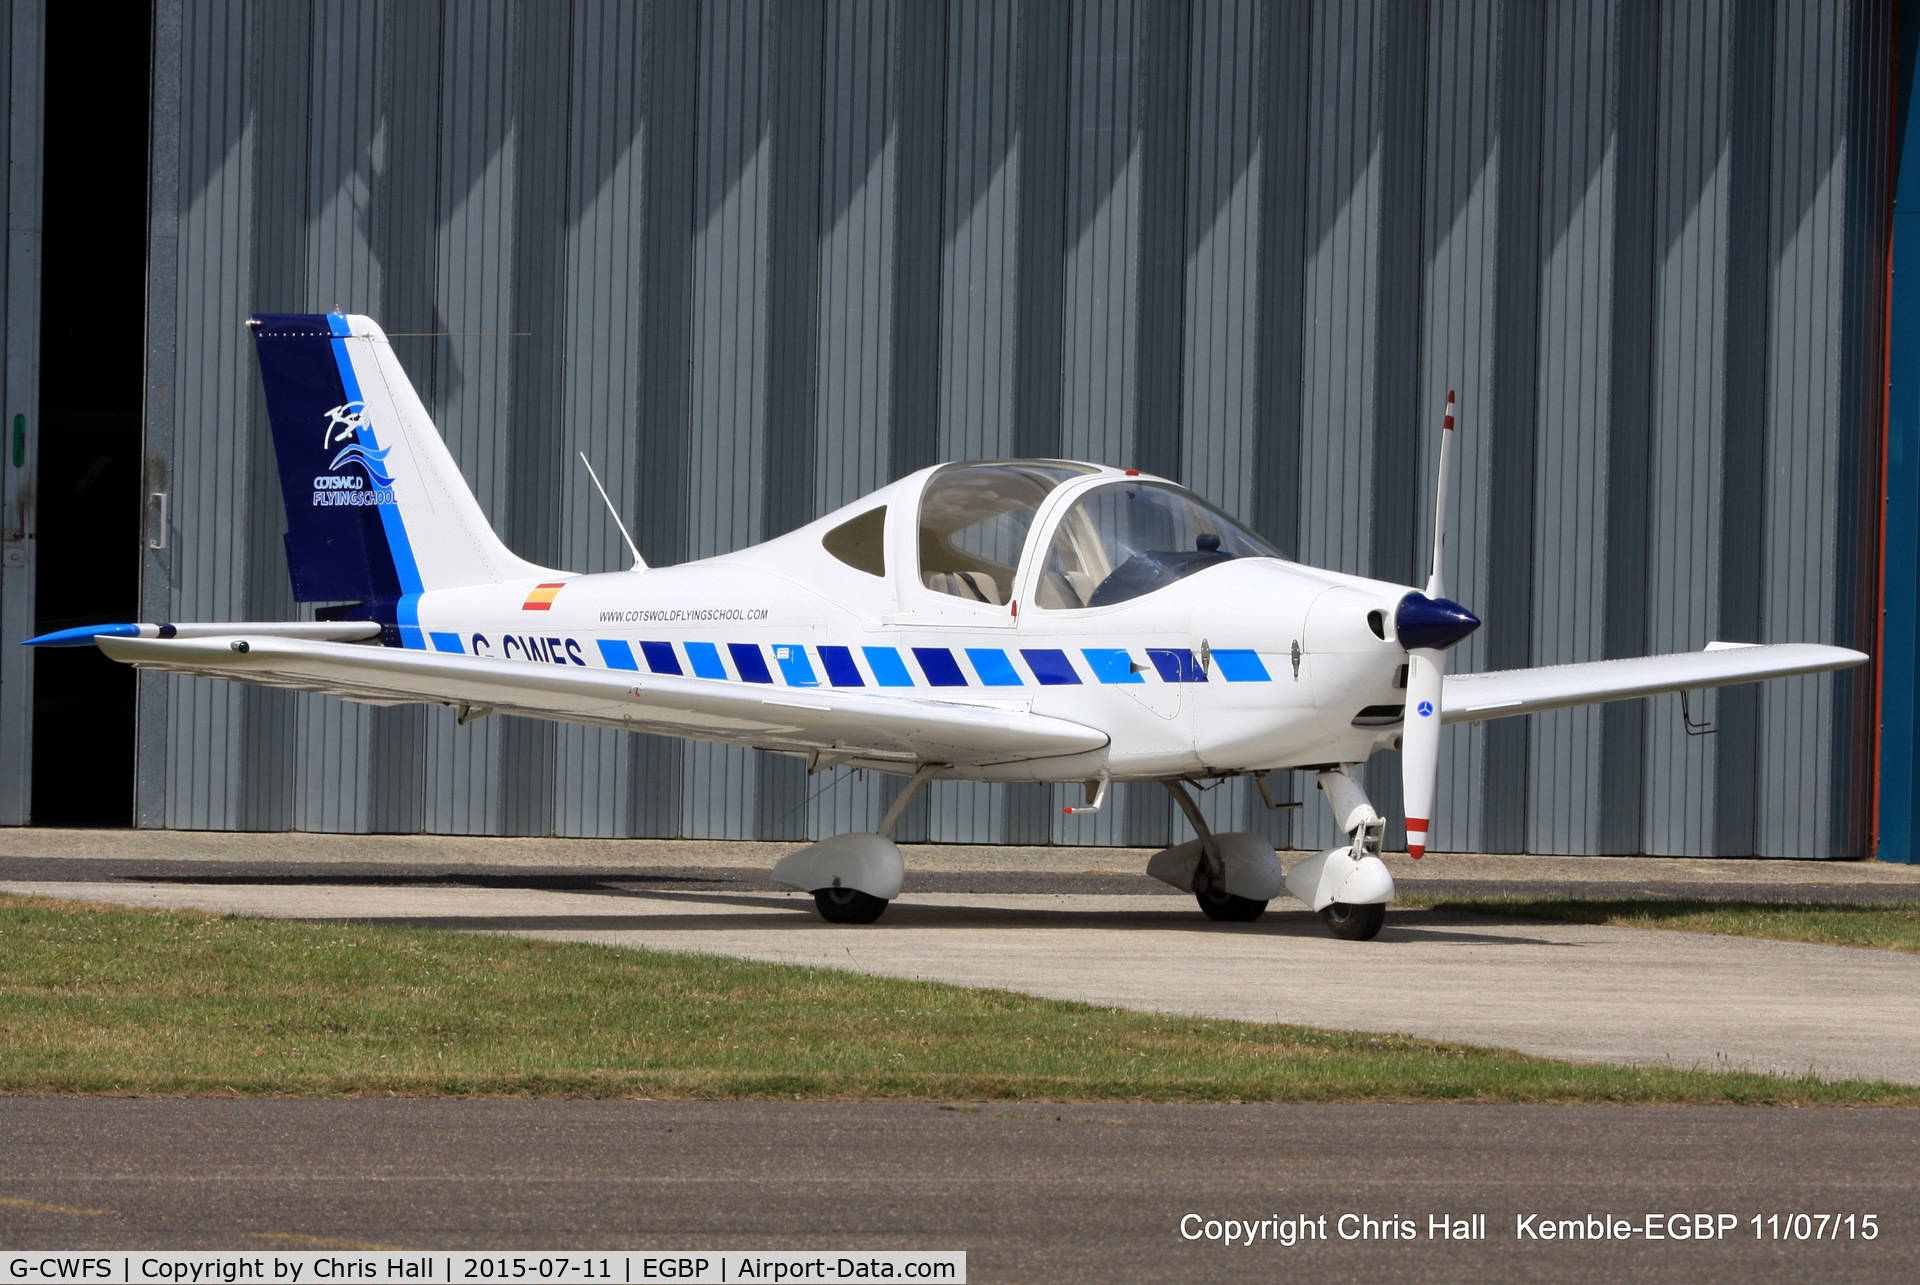 G-CWFS, 2007 Tecnam P2002-JF Sierra C/N 077, Cotswold Flying School